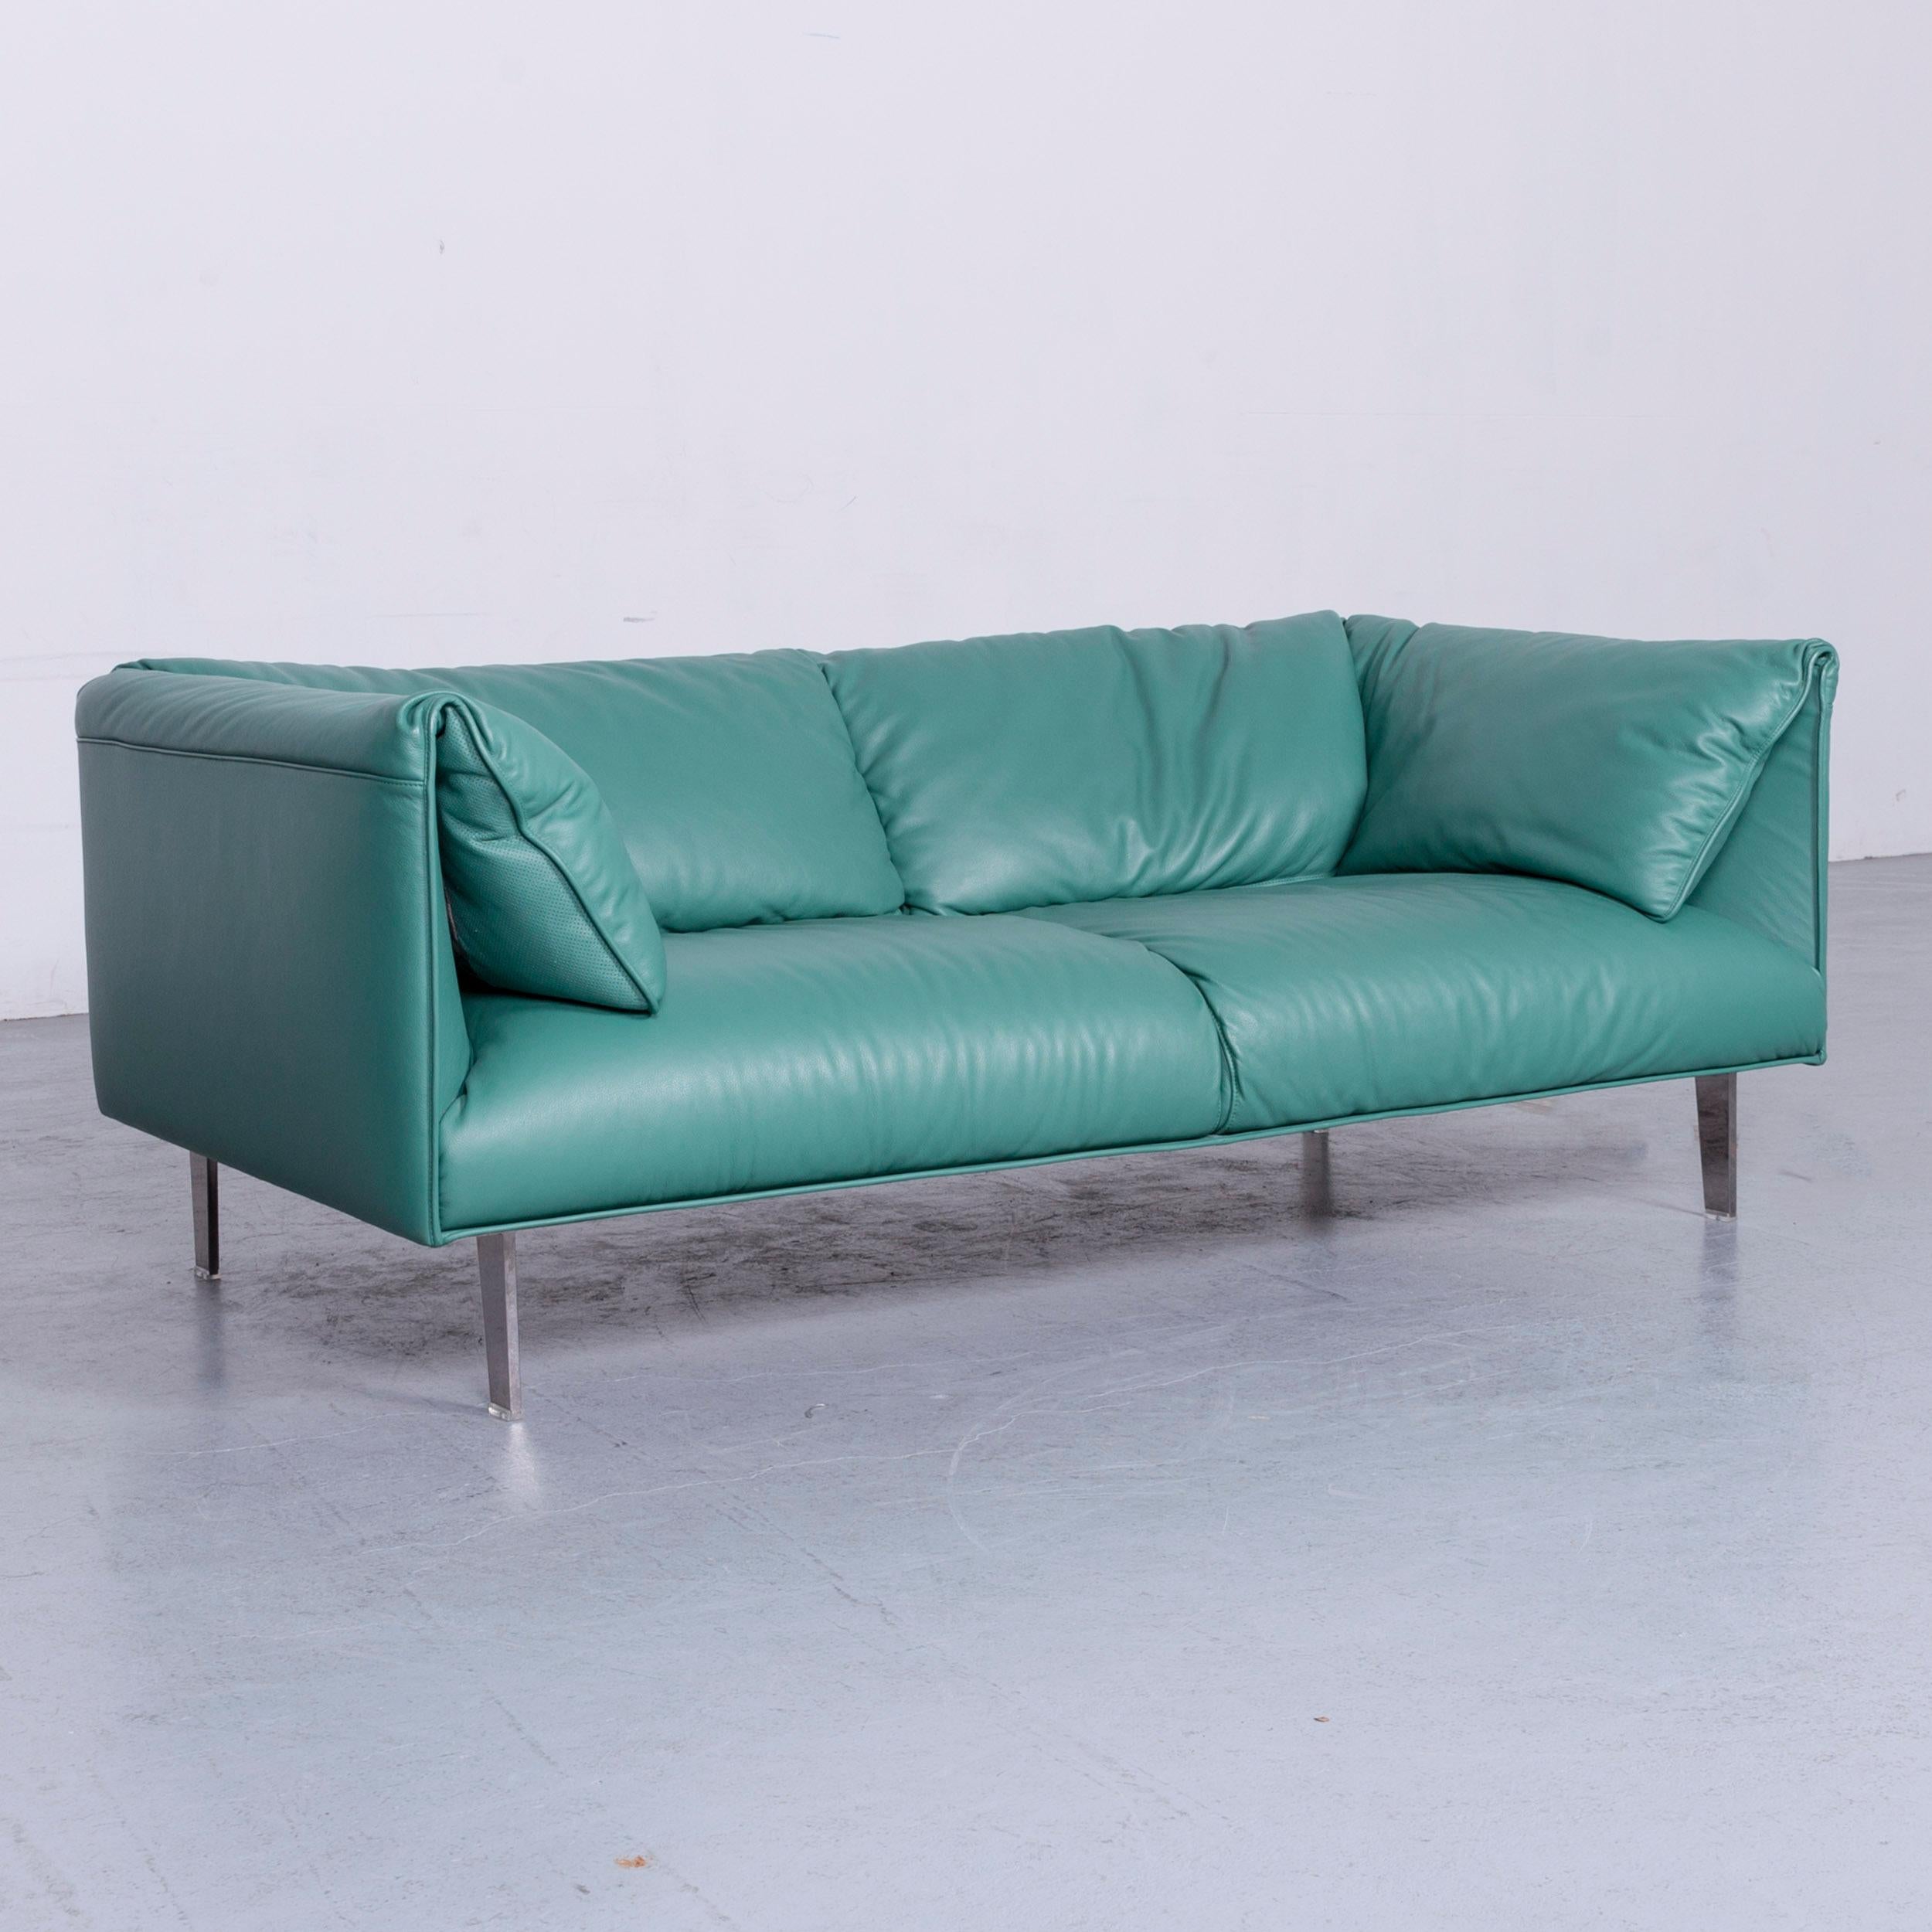 We bring to you an Poltrona Frau John-John designer leather sofa in mint two-seat.